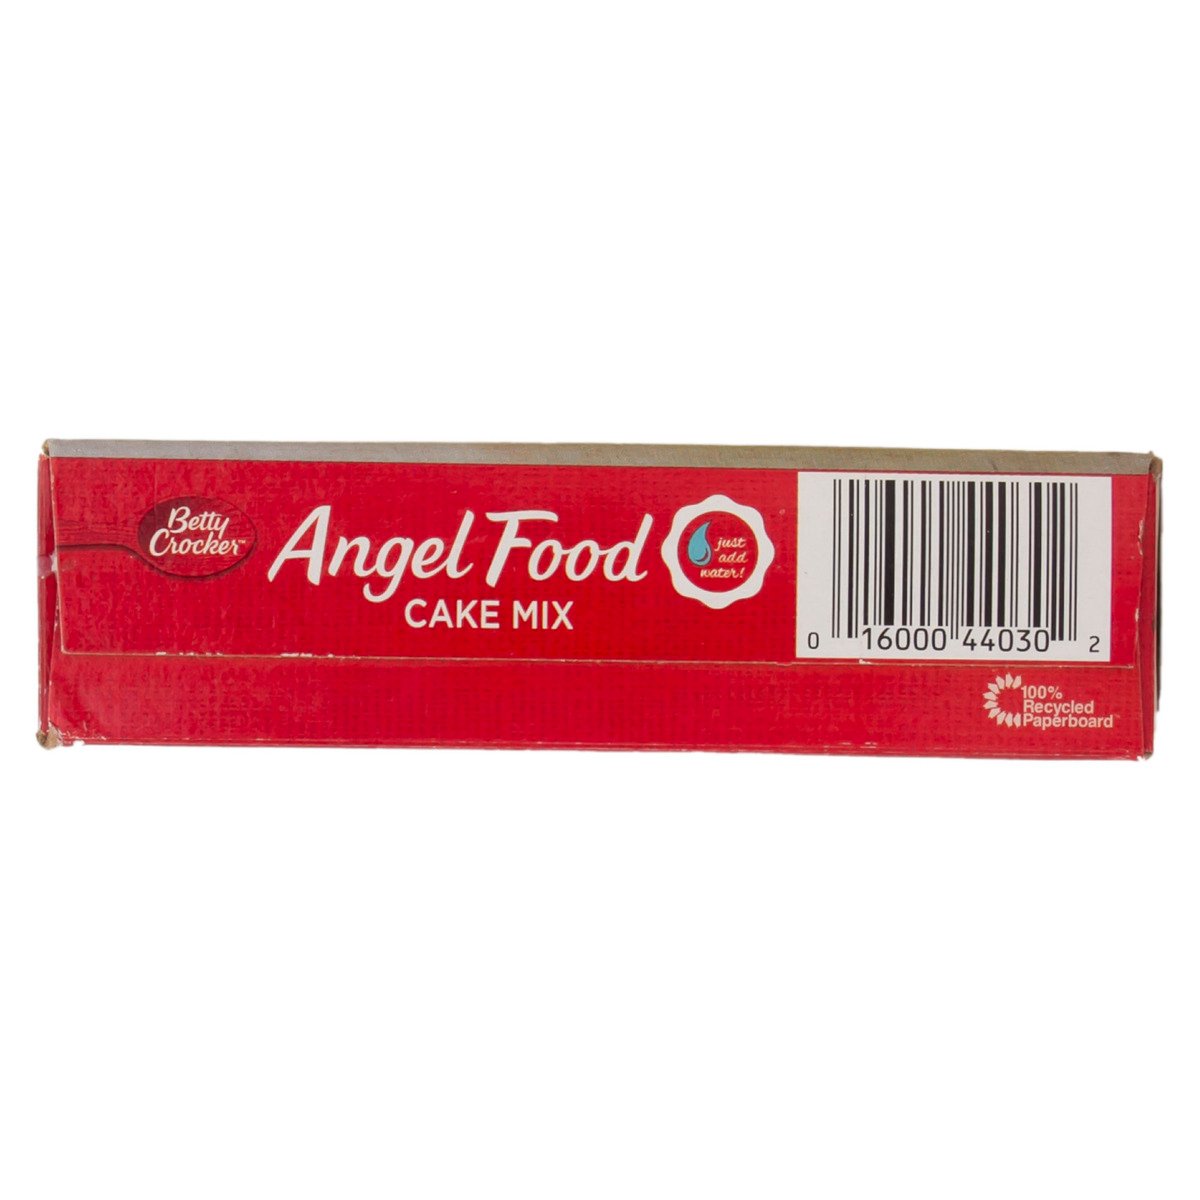 Betty Crocker Angel Food Cake Mix 453g